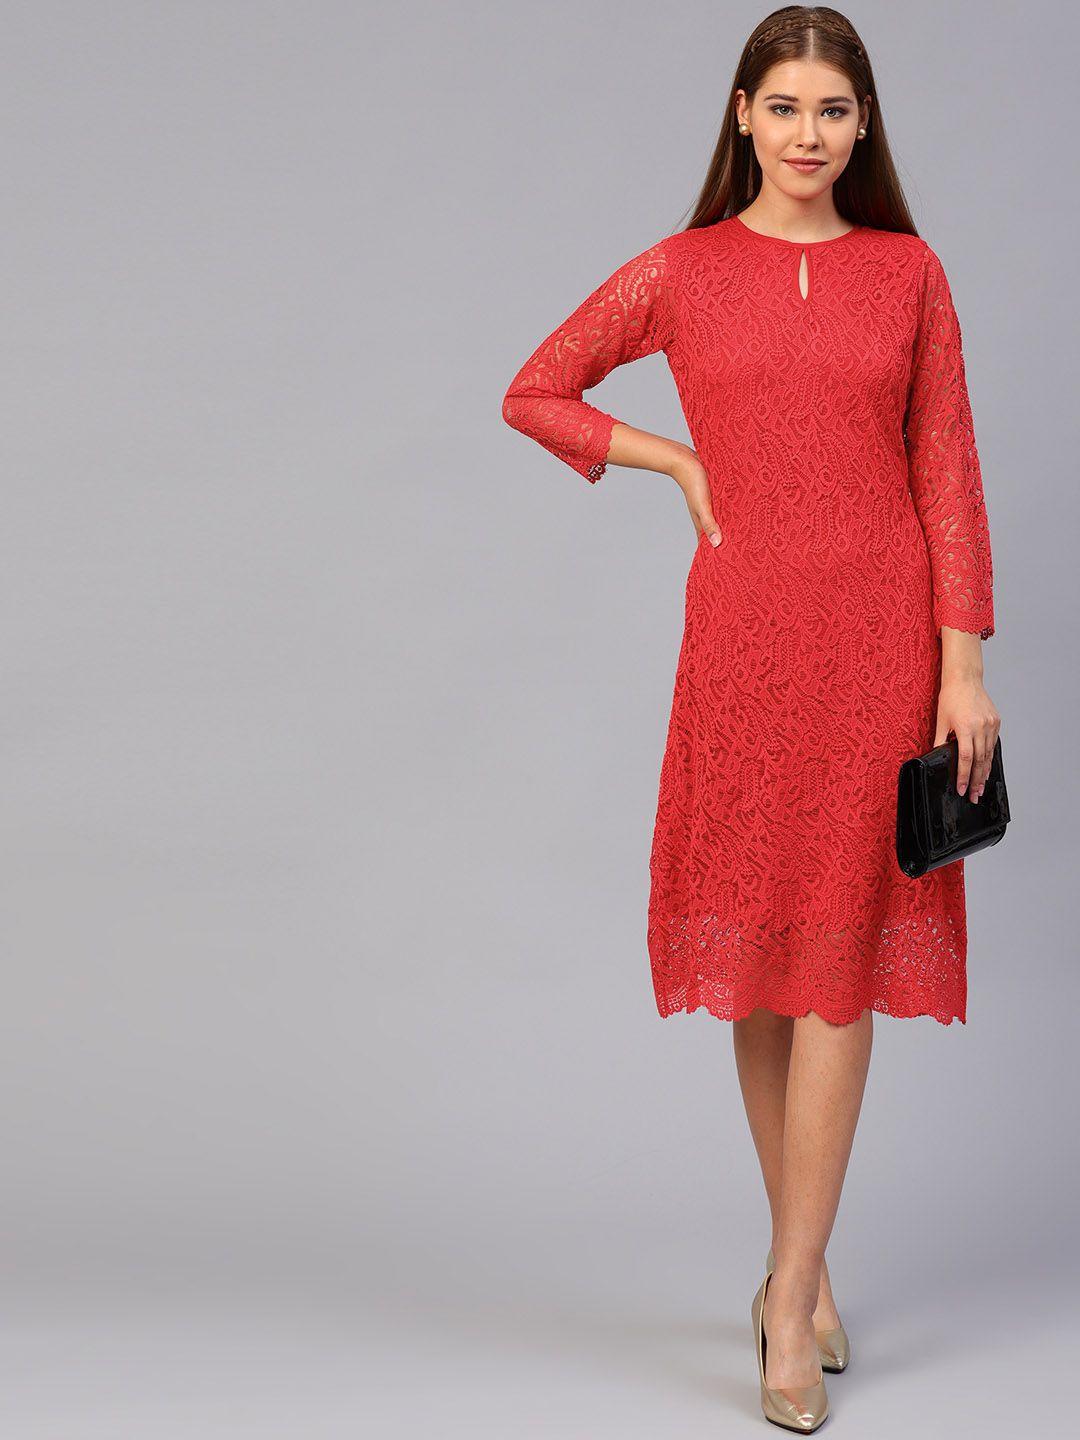 athena women red self-design sheath dress